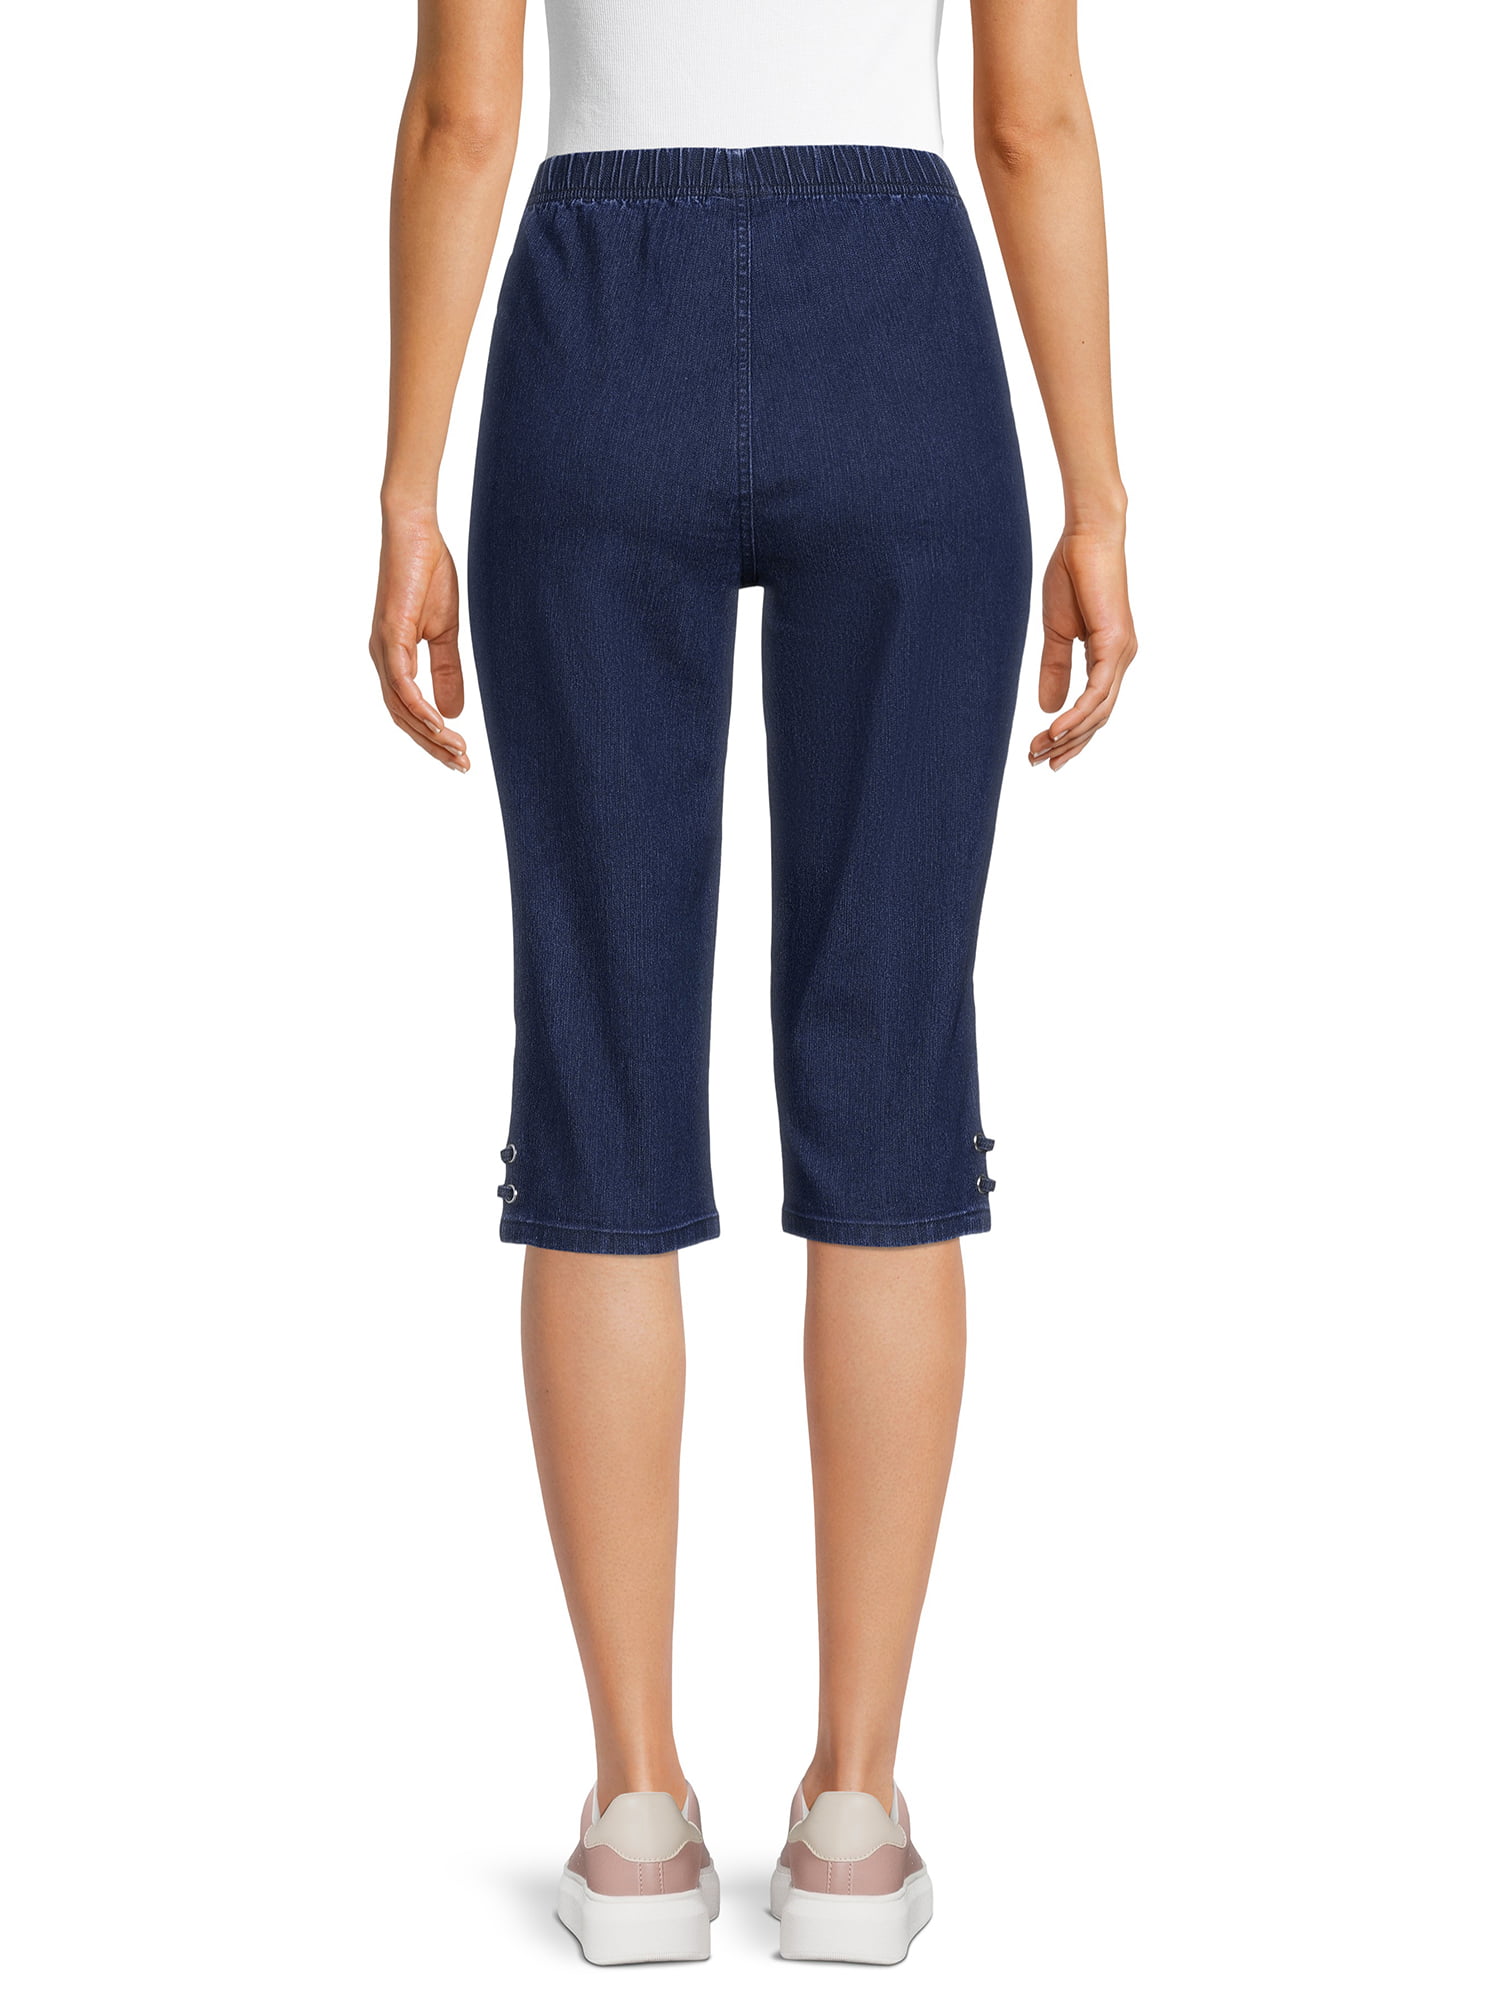 RealSize Women's 17 Pull On Stretch Capri Pants, Blue, XL (16-18)